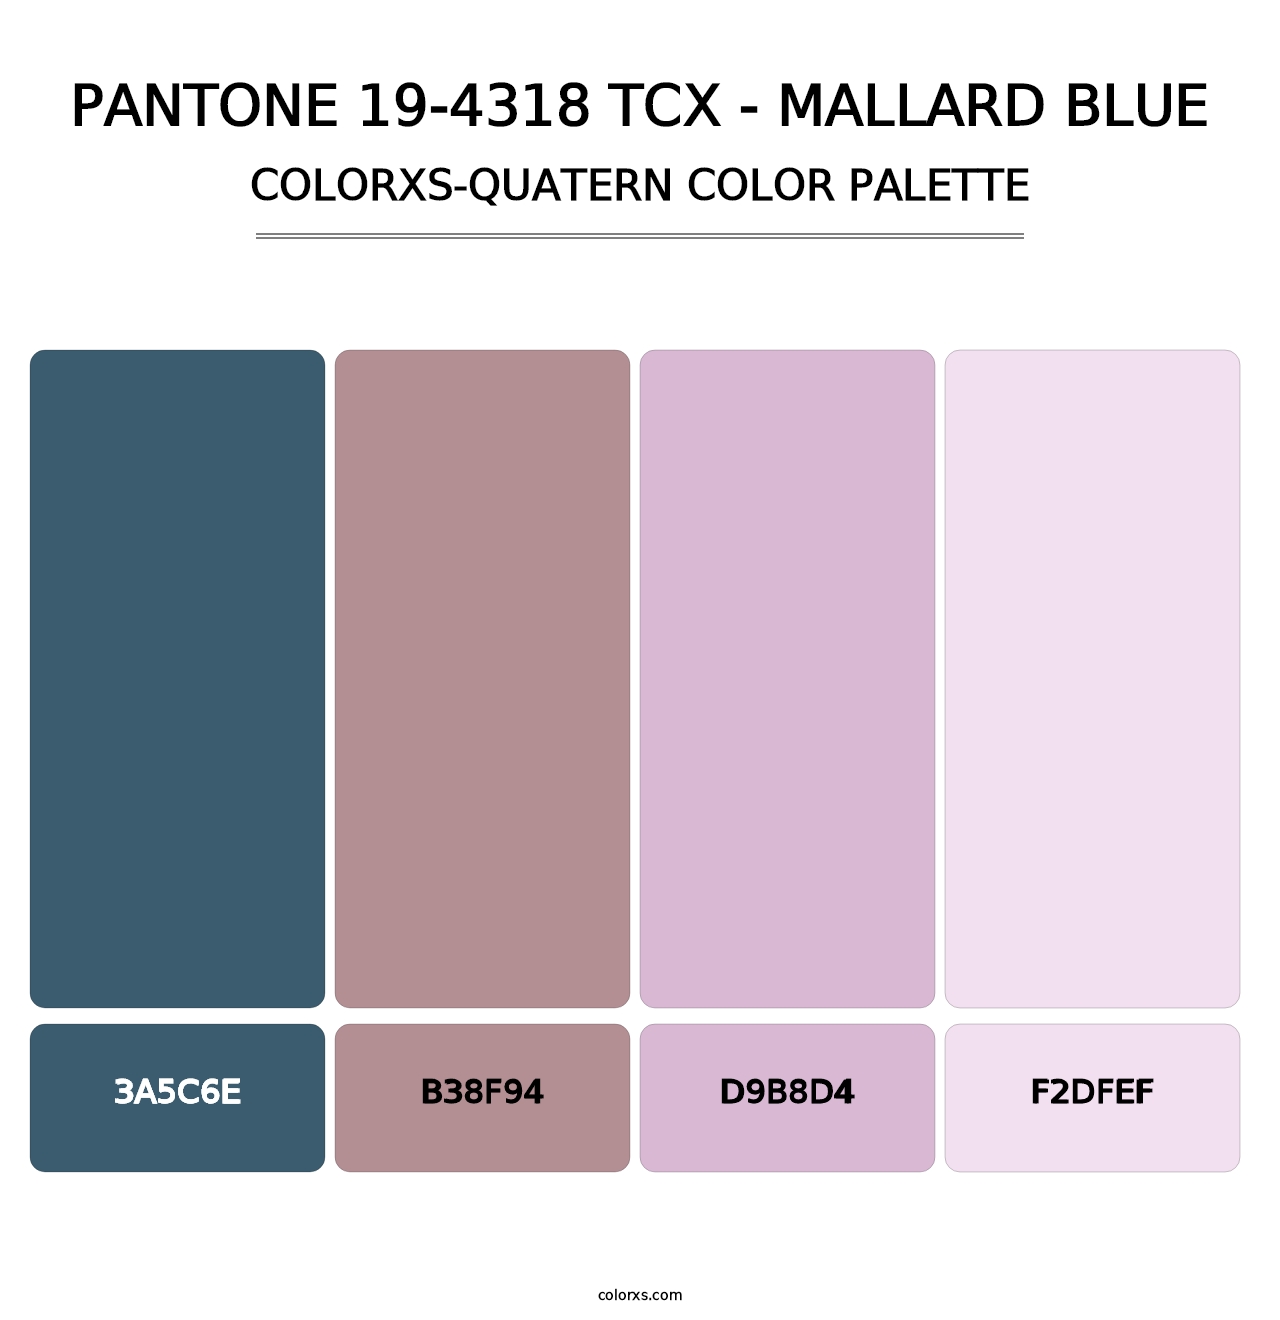 PANTONE 19-4318 TCX - Mallard Blue - Colorxs Quatern Palette